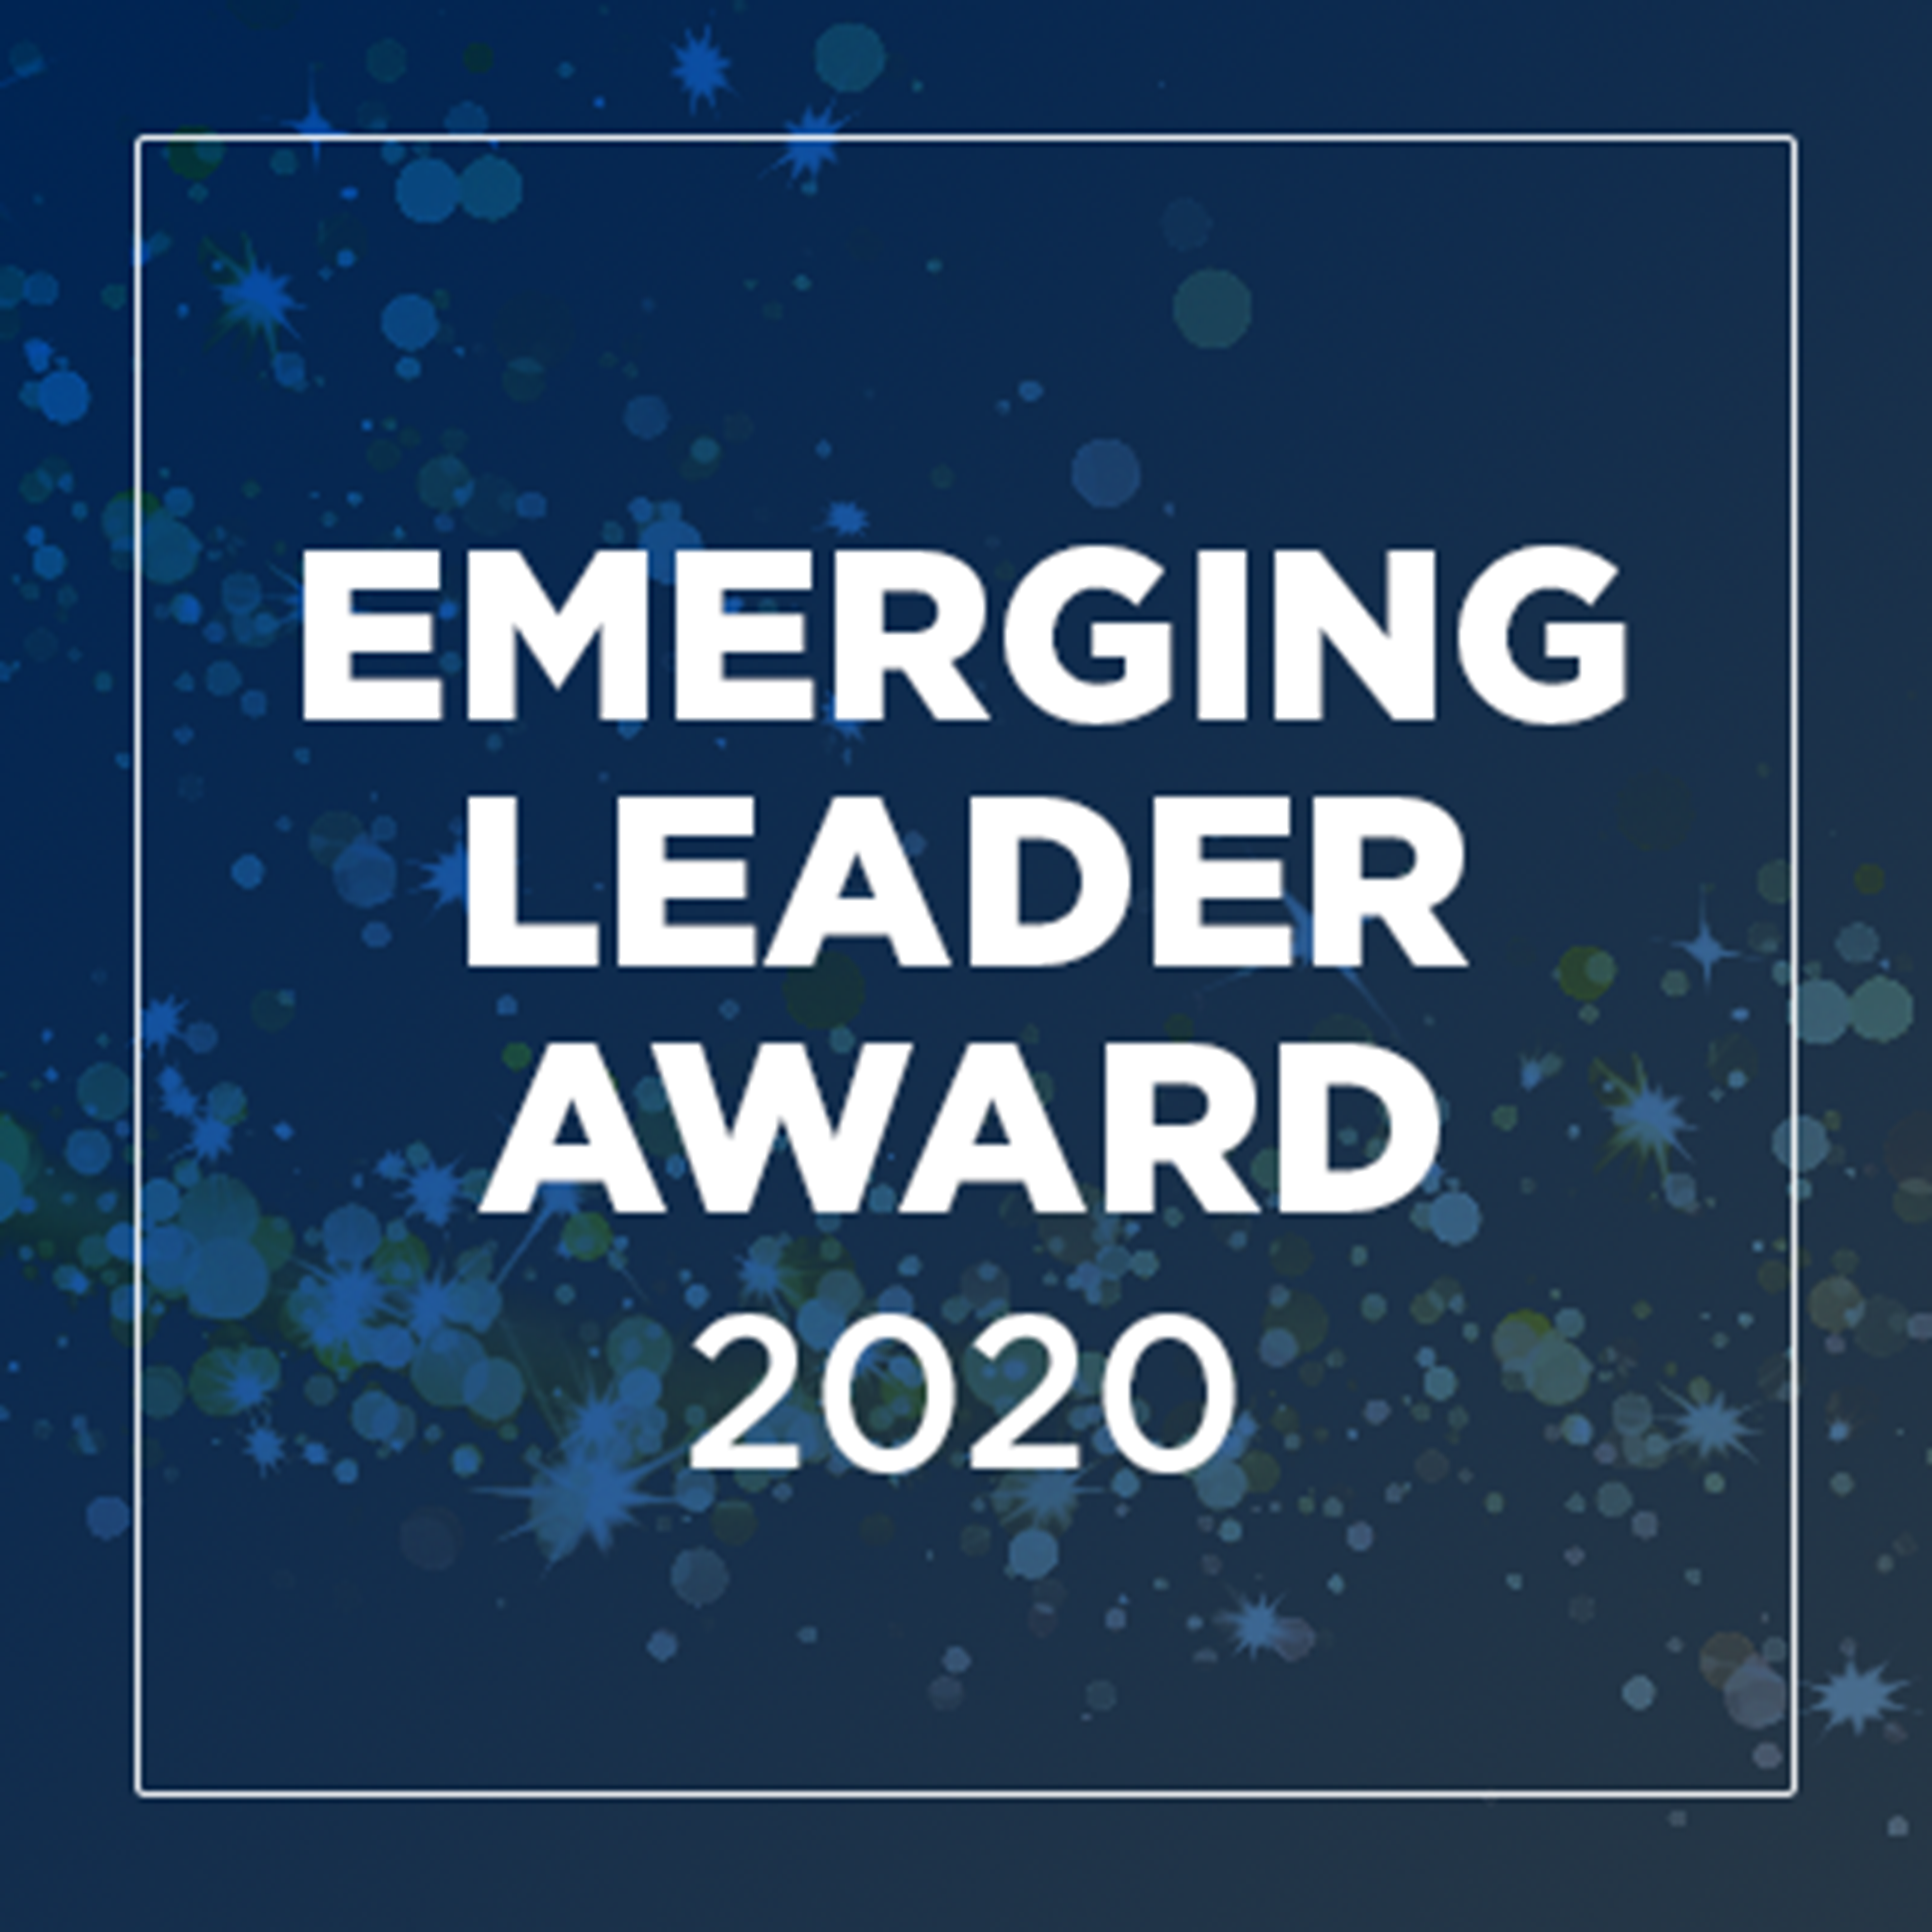 Emerging Leader Award 2020